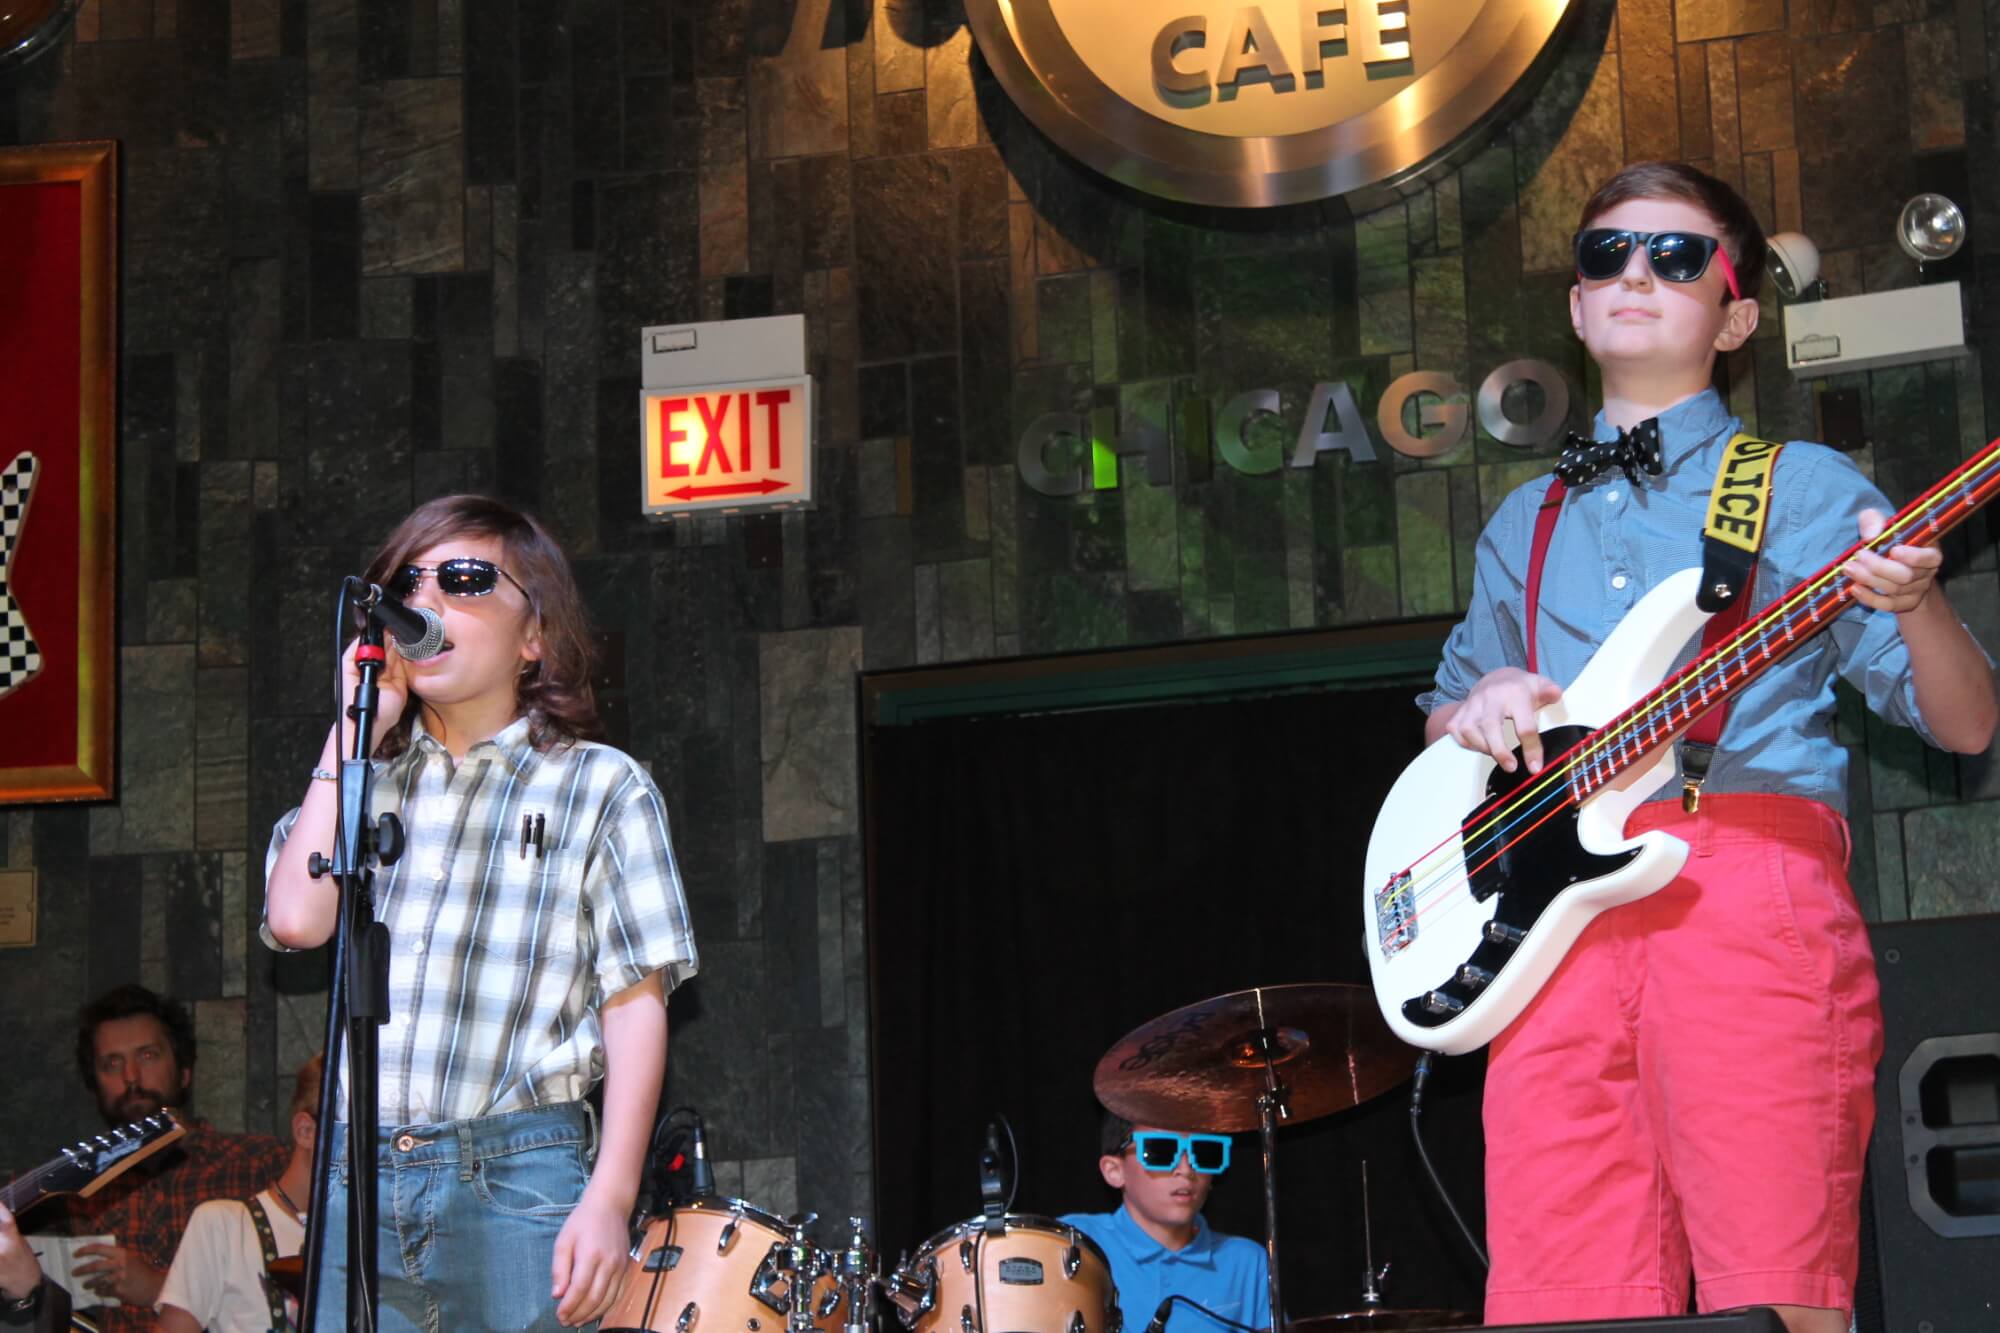 Nerd Rock at the Hard Rock Cafe!